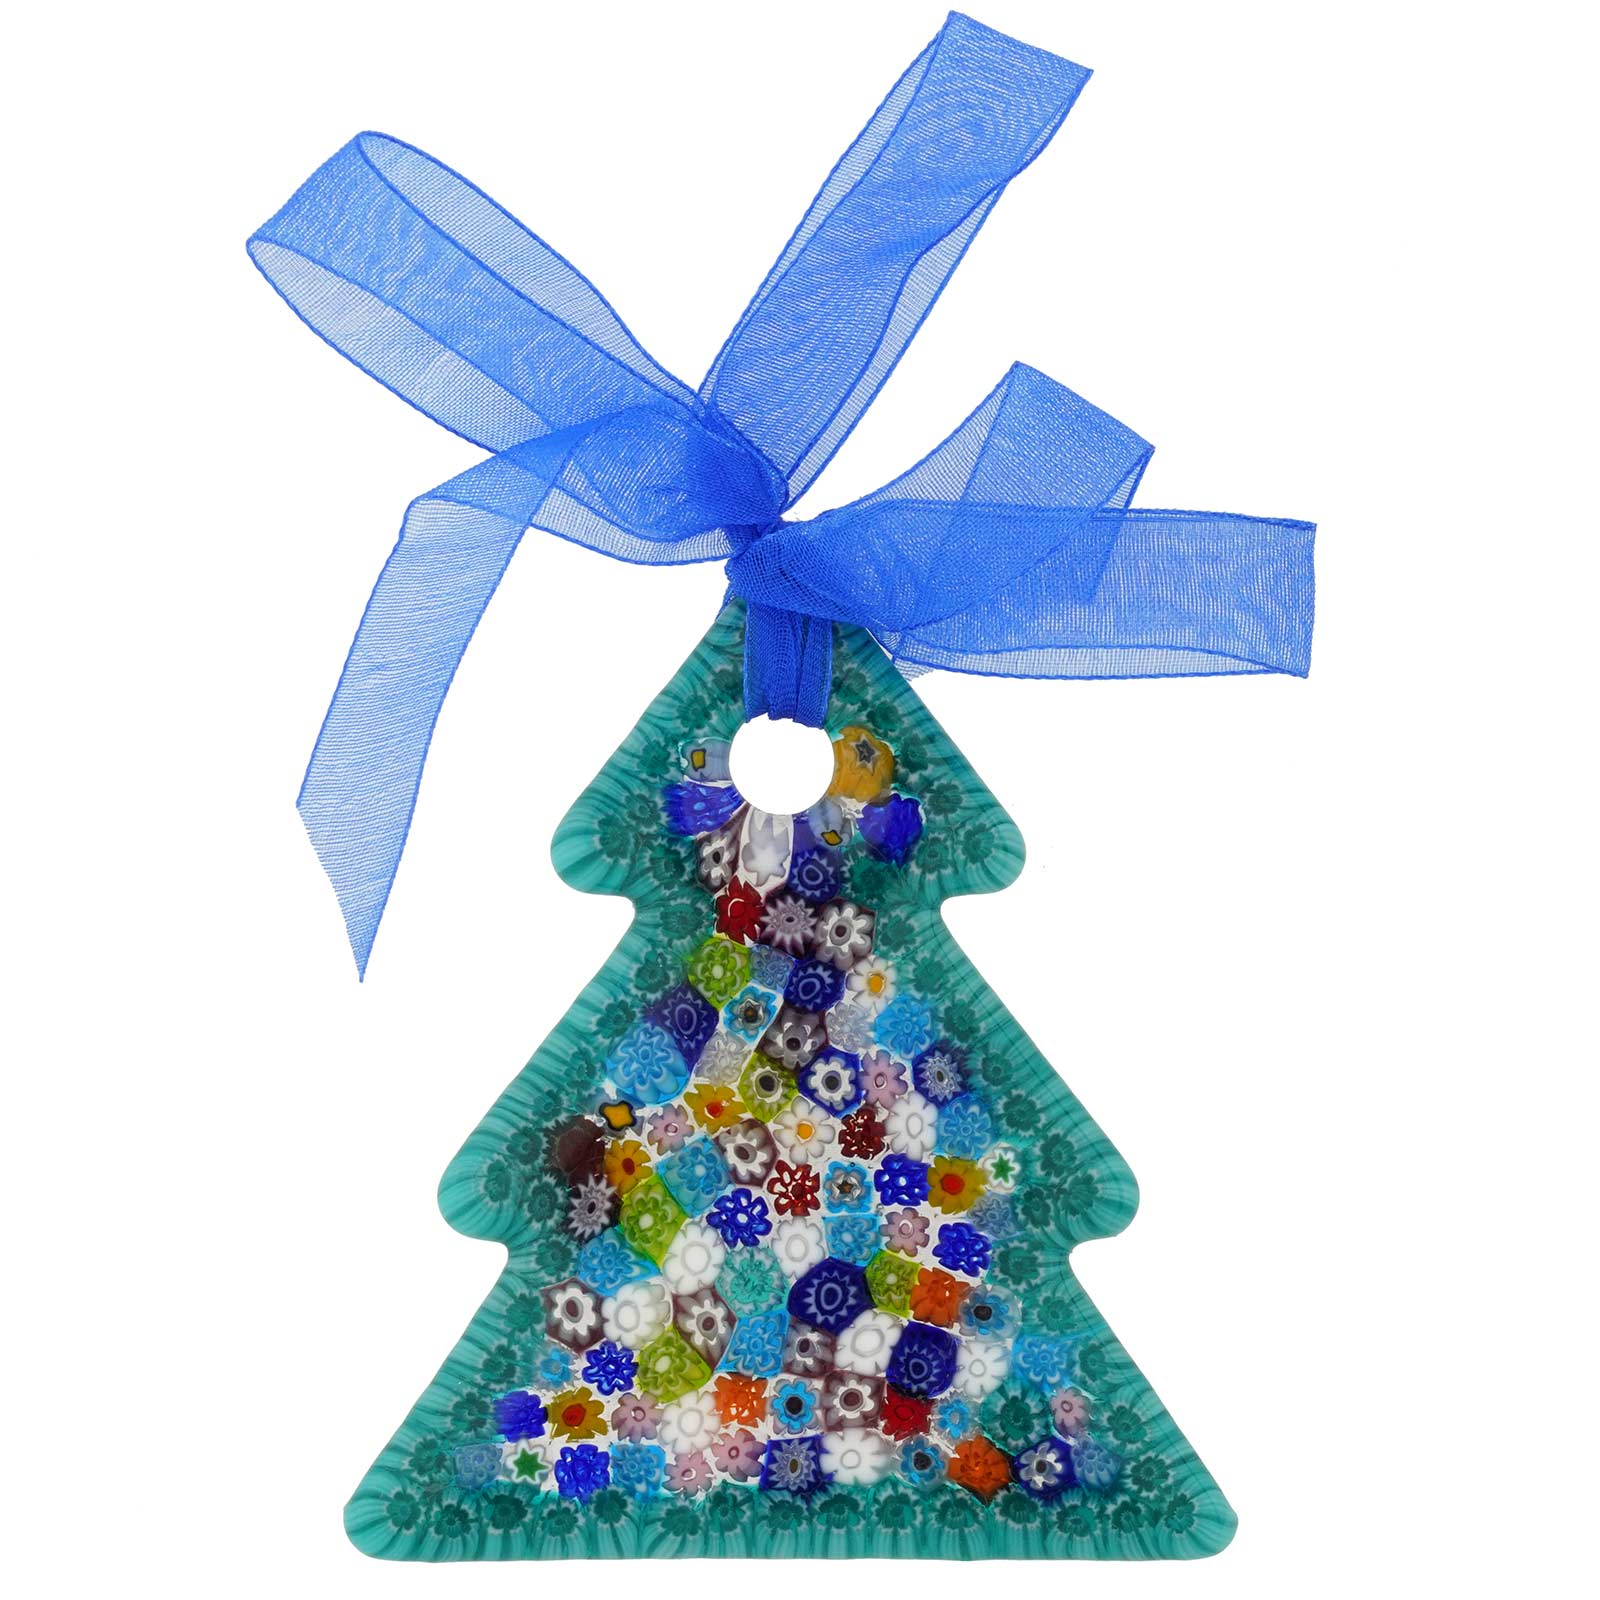 Murano Glass Hanging Christmas Tree Ornament with Ribbon - Seafoam Green